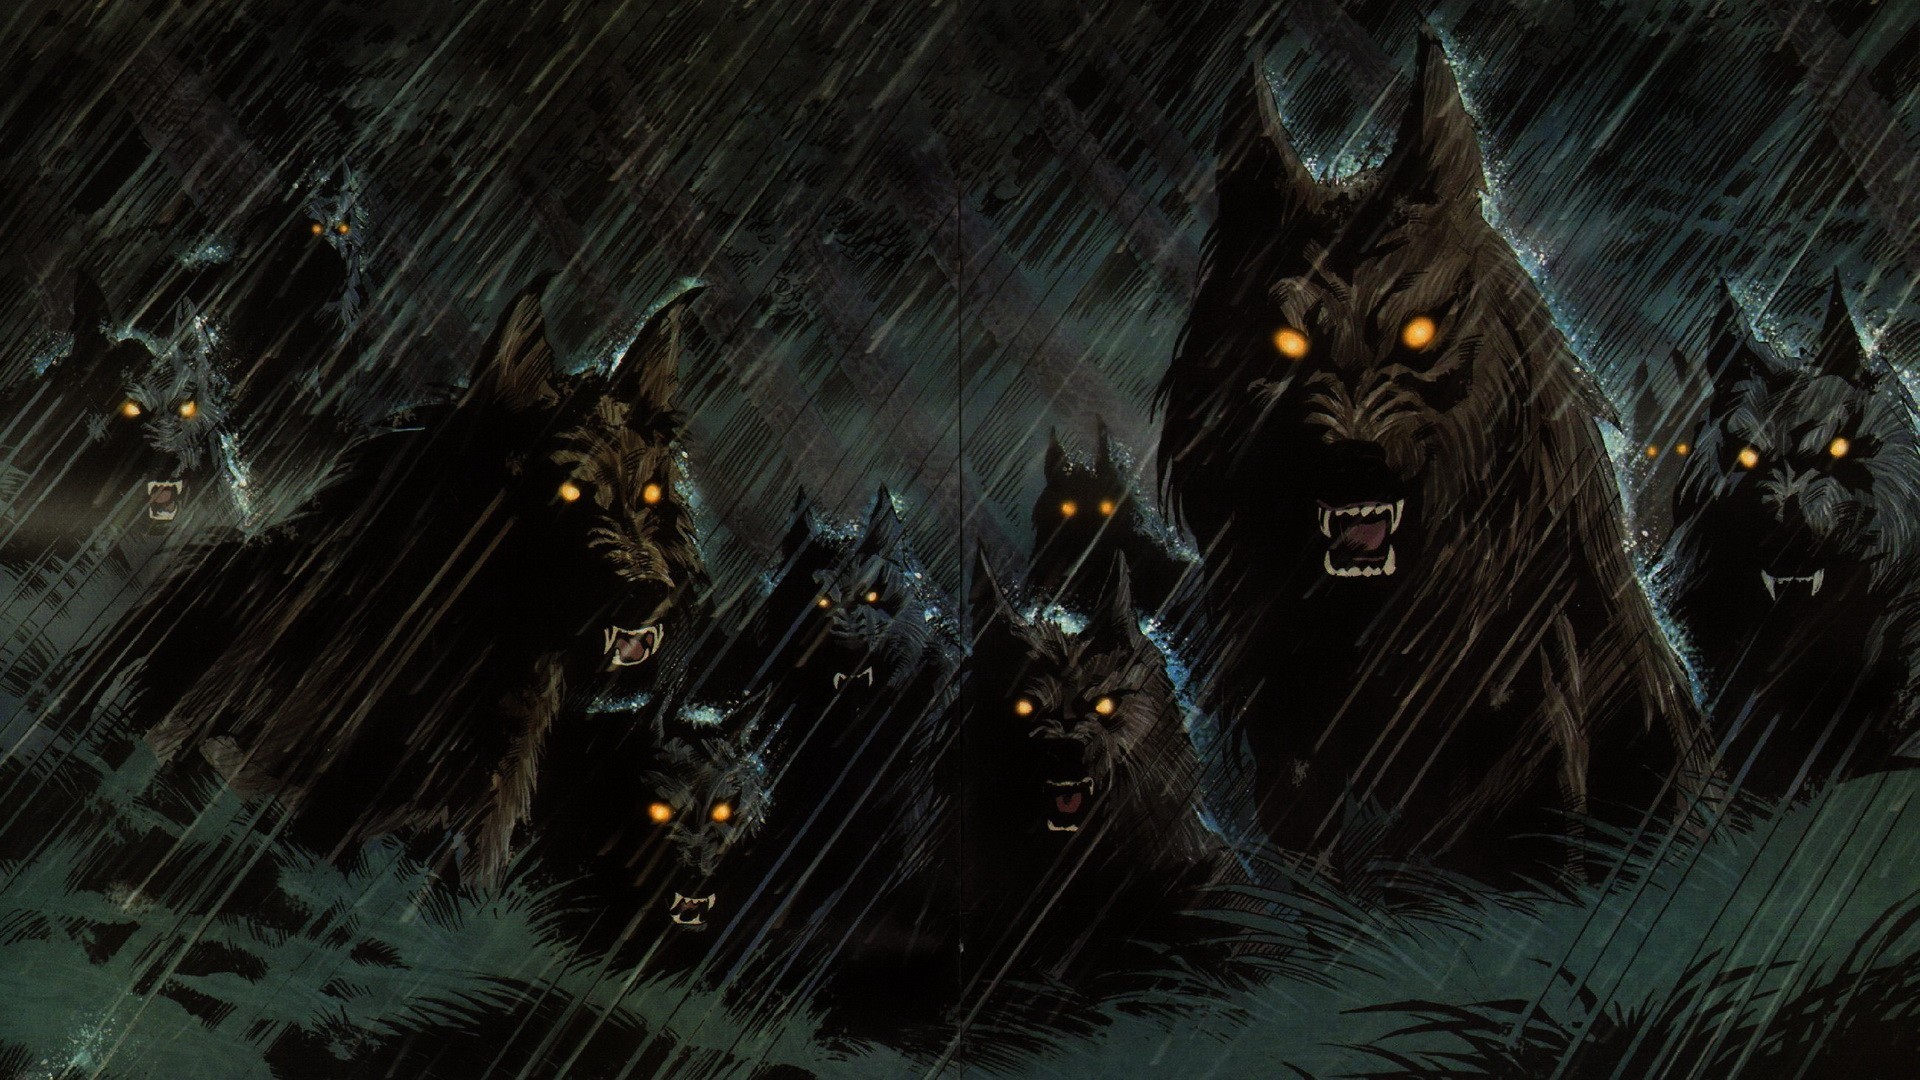 General 1920x1080 fantasy art artwork wolf dog creature glowing eyes rain storm fangs animals mammals